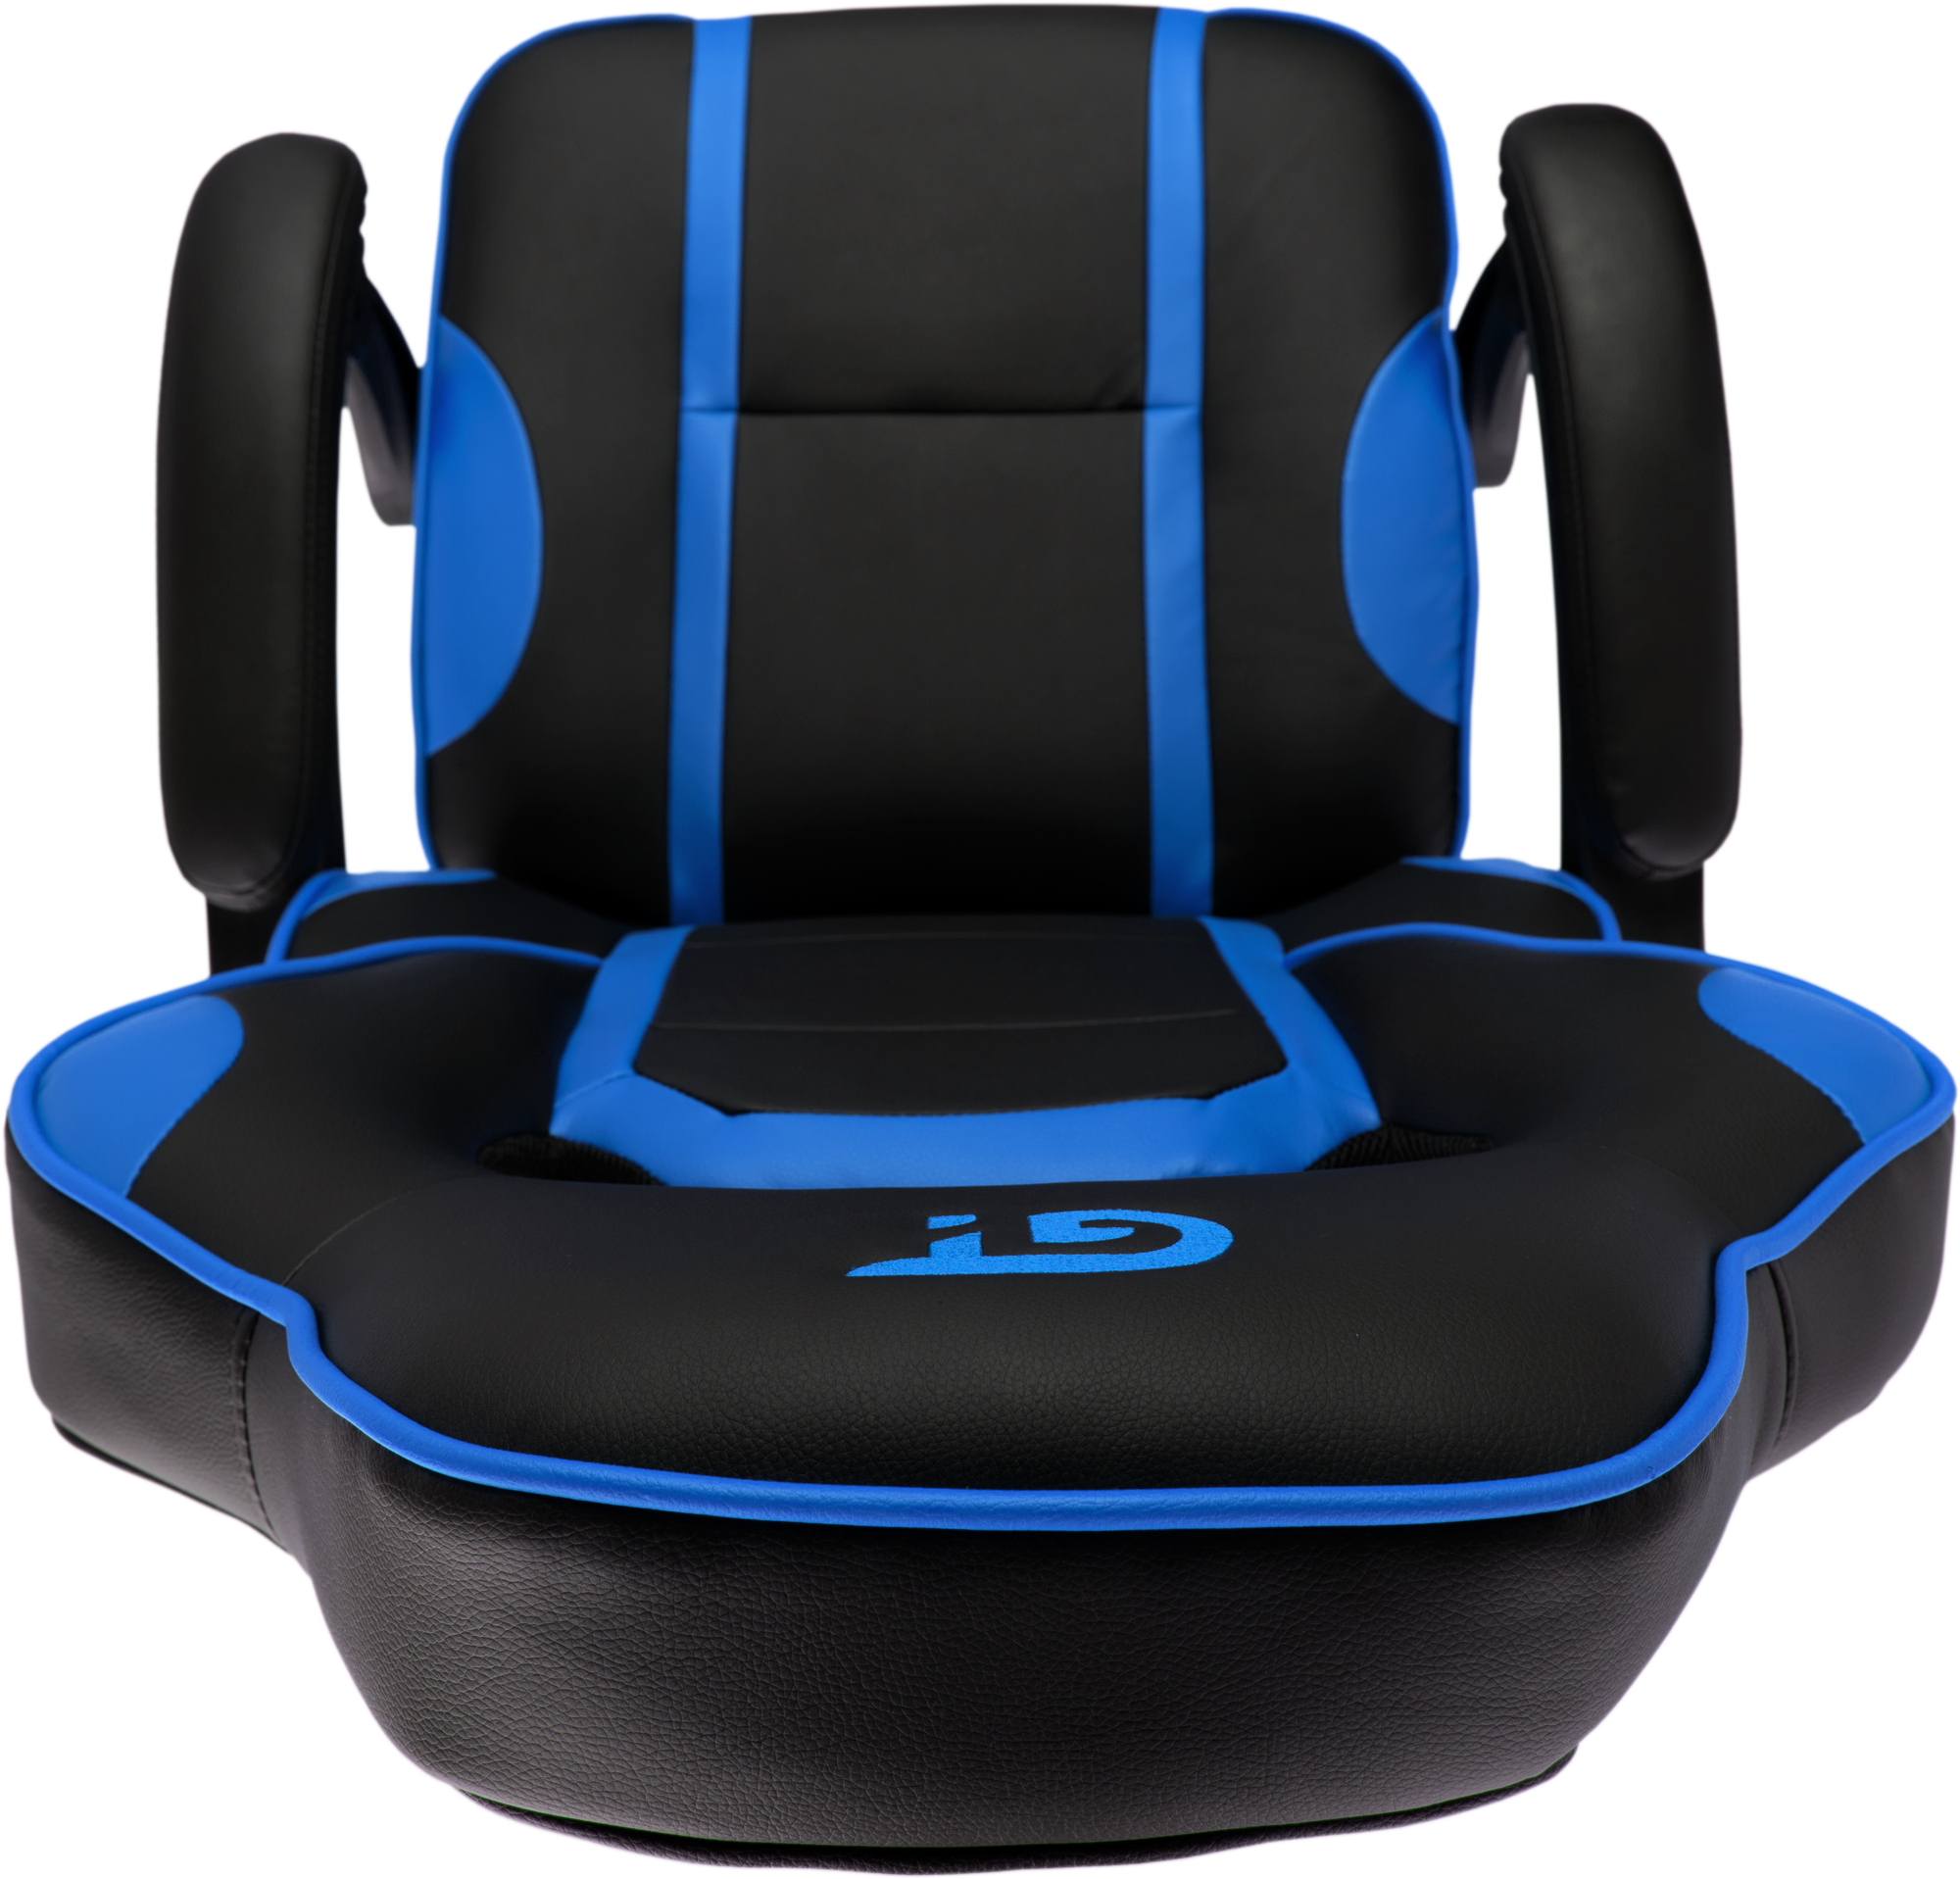 Геймерське крісло GT Racer чорне із синім (X-2749-1 Black/Blue) - фото 10